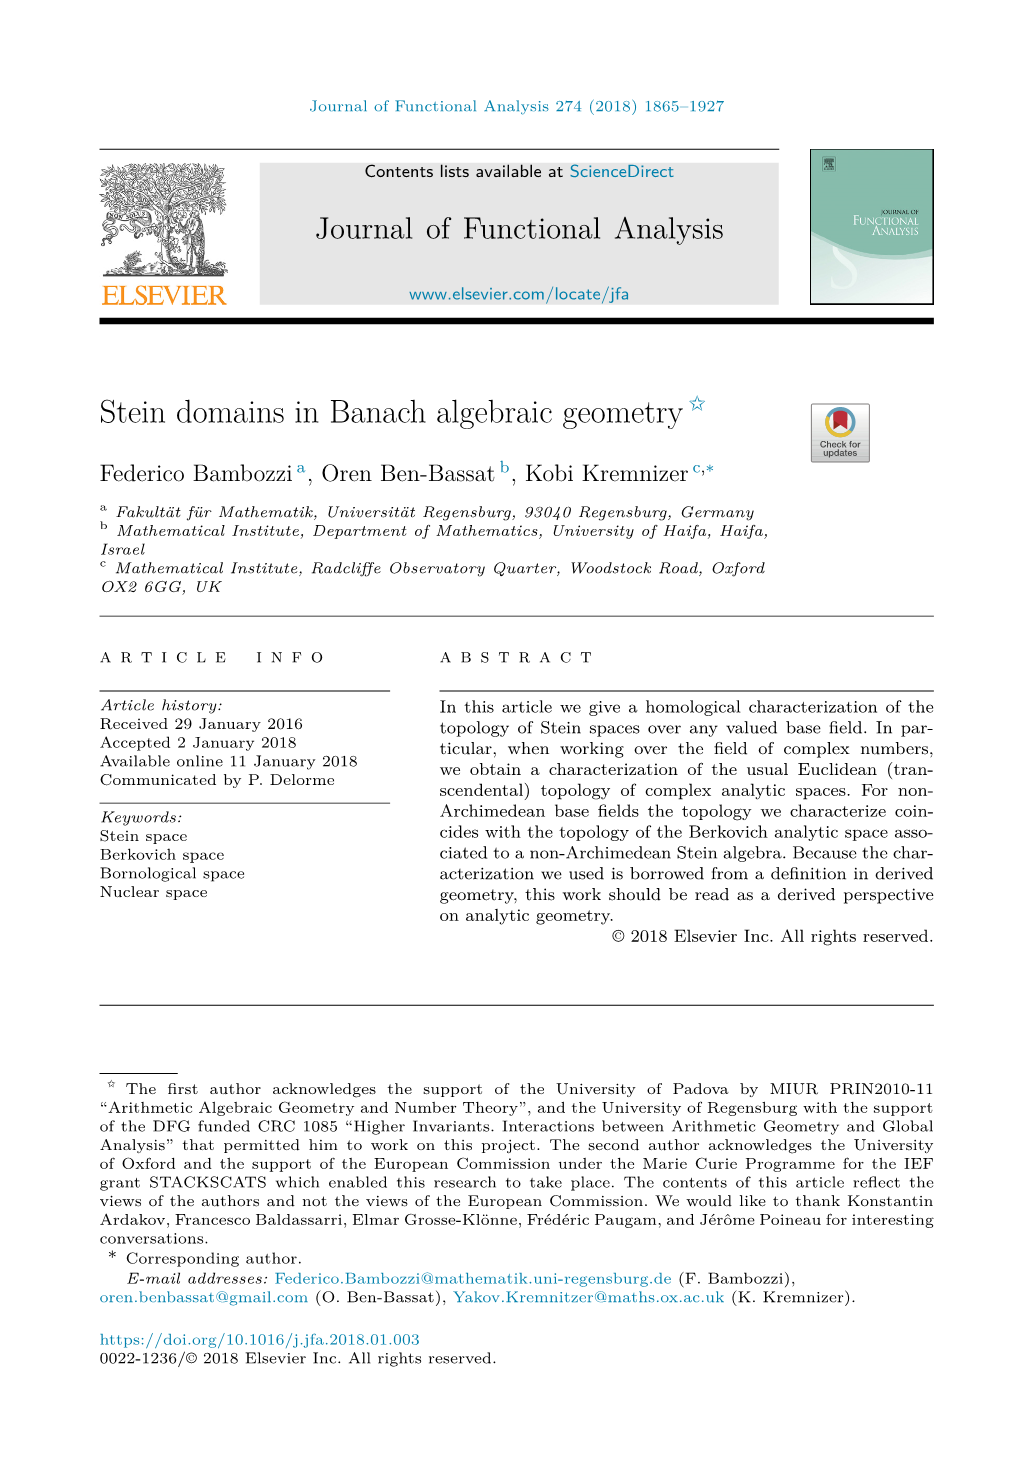 Stein Domains in Banach Algebraic Geometry